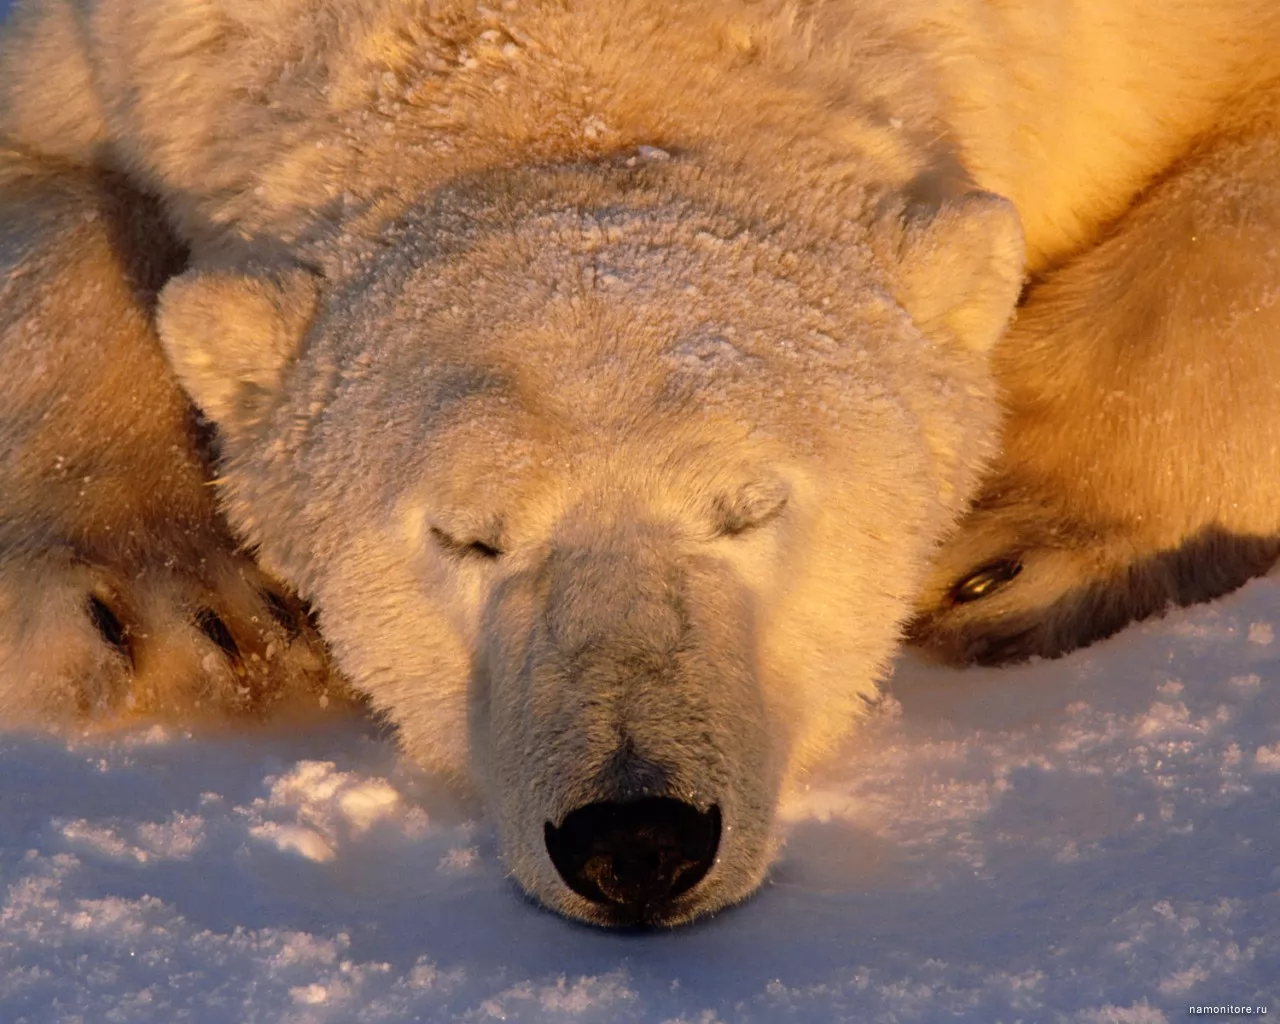 Sleeping bear, animals, bears x